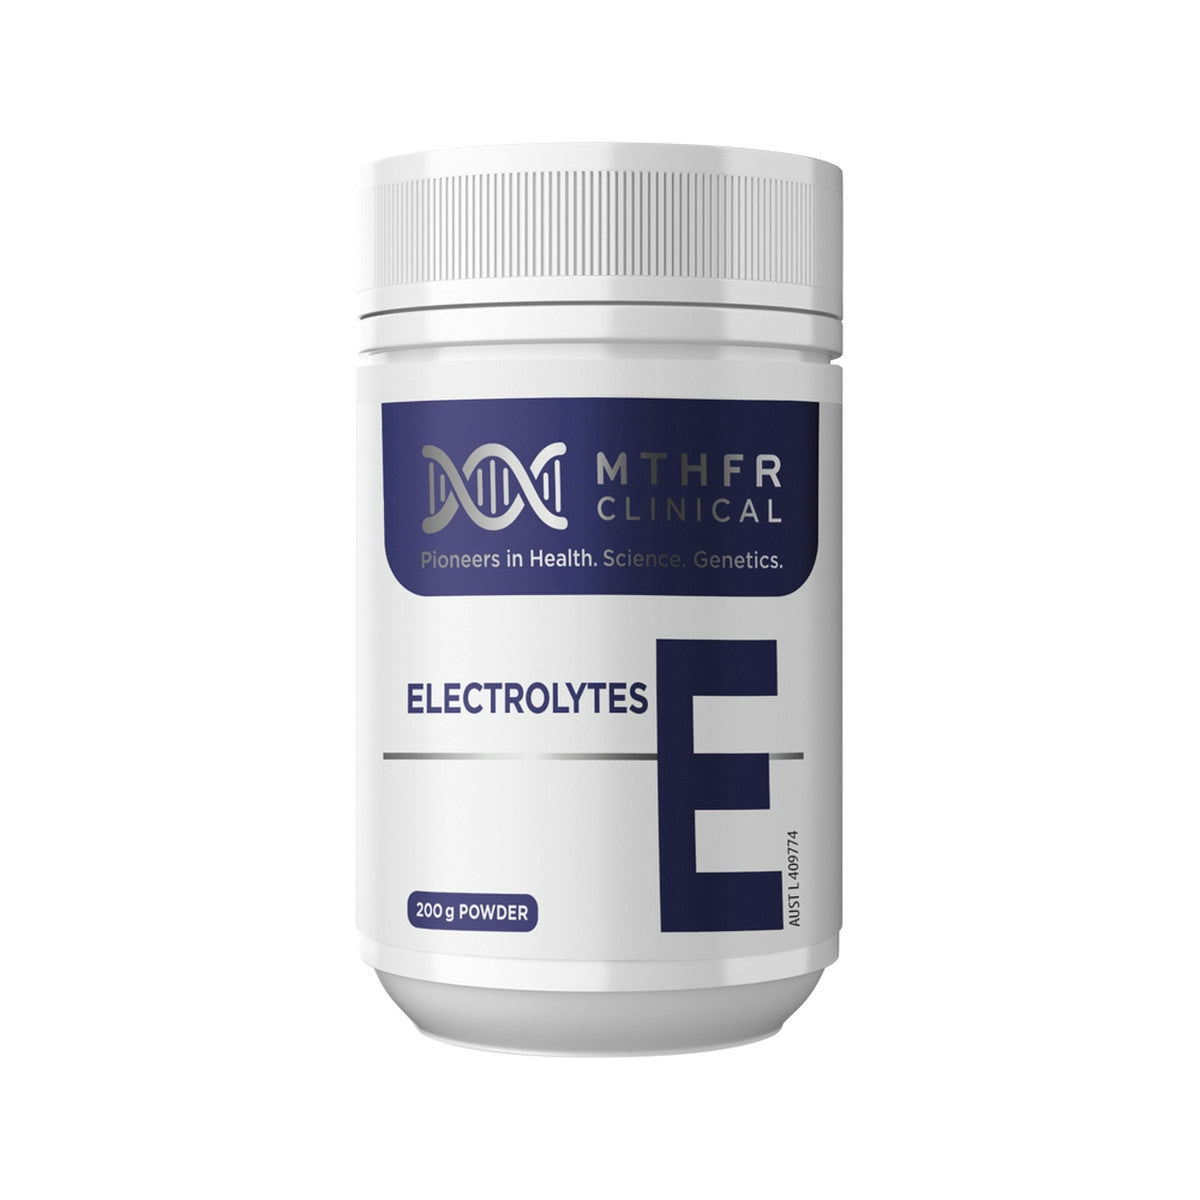 image of MTHFR Clinical Electrolytes Powder 200g on white background